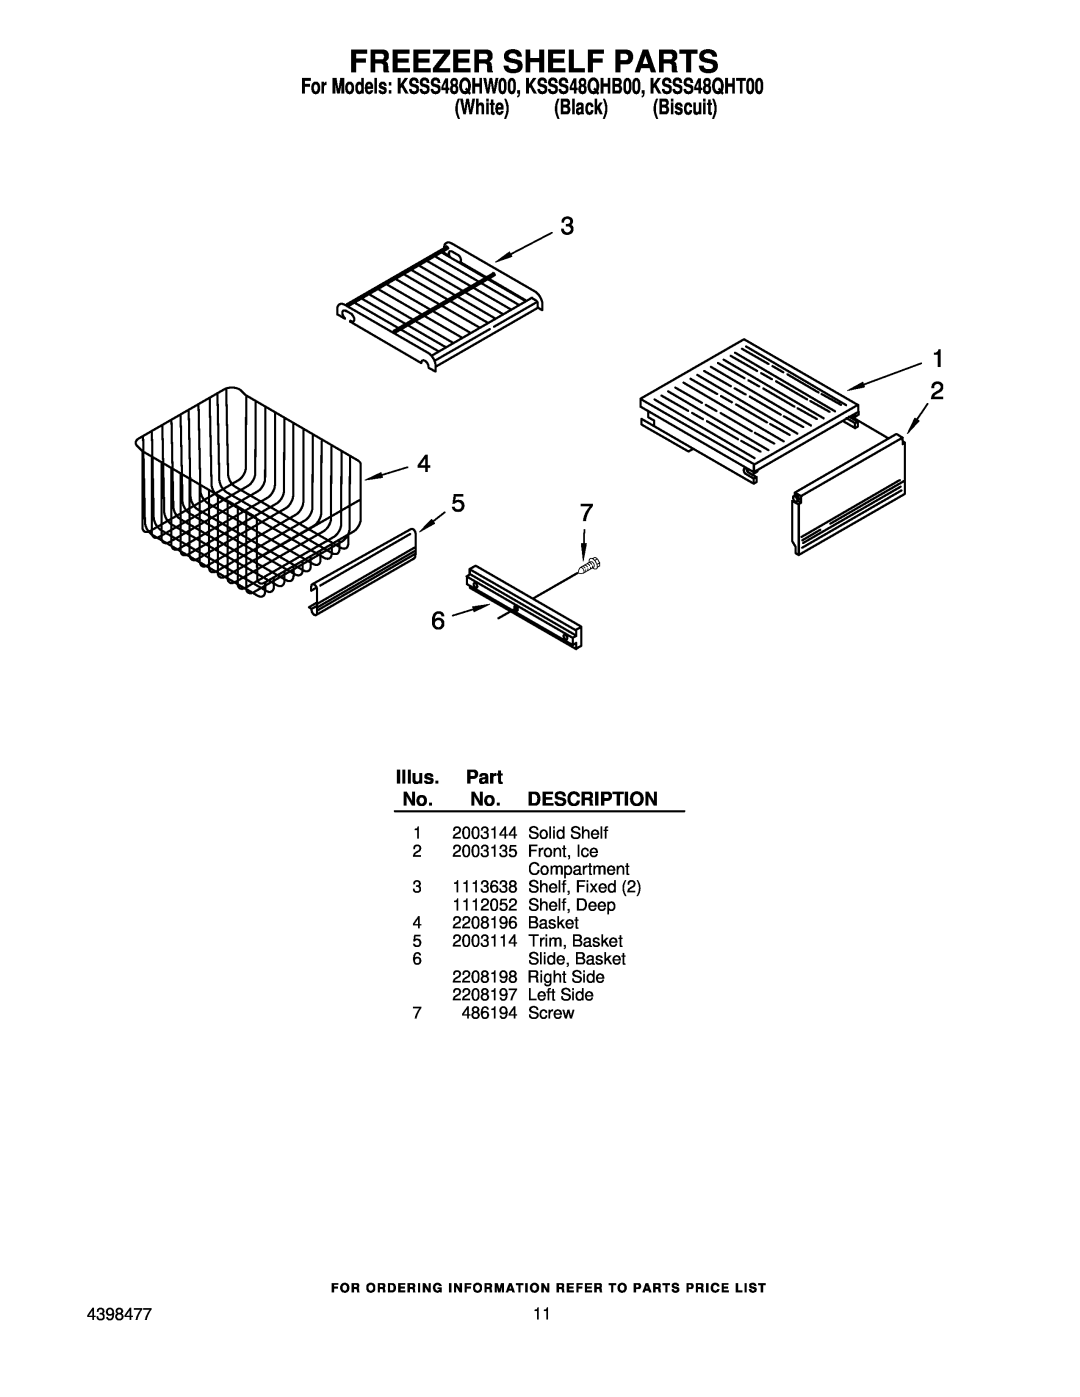 KitchenAid manual Freezer Shelf Parts, For Models KSSS48QHW00, KSSS48QHB00, KSSS48QHT00 White Black Biscuit 